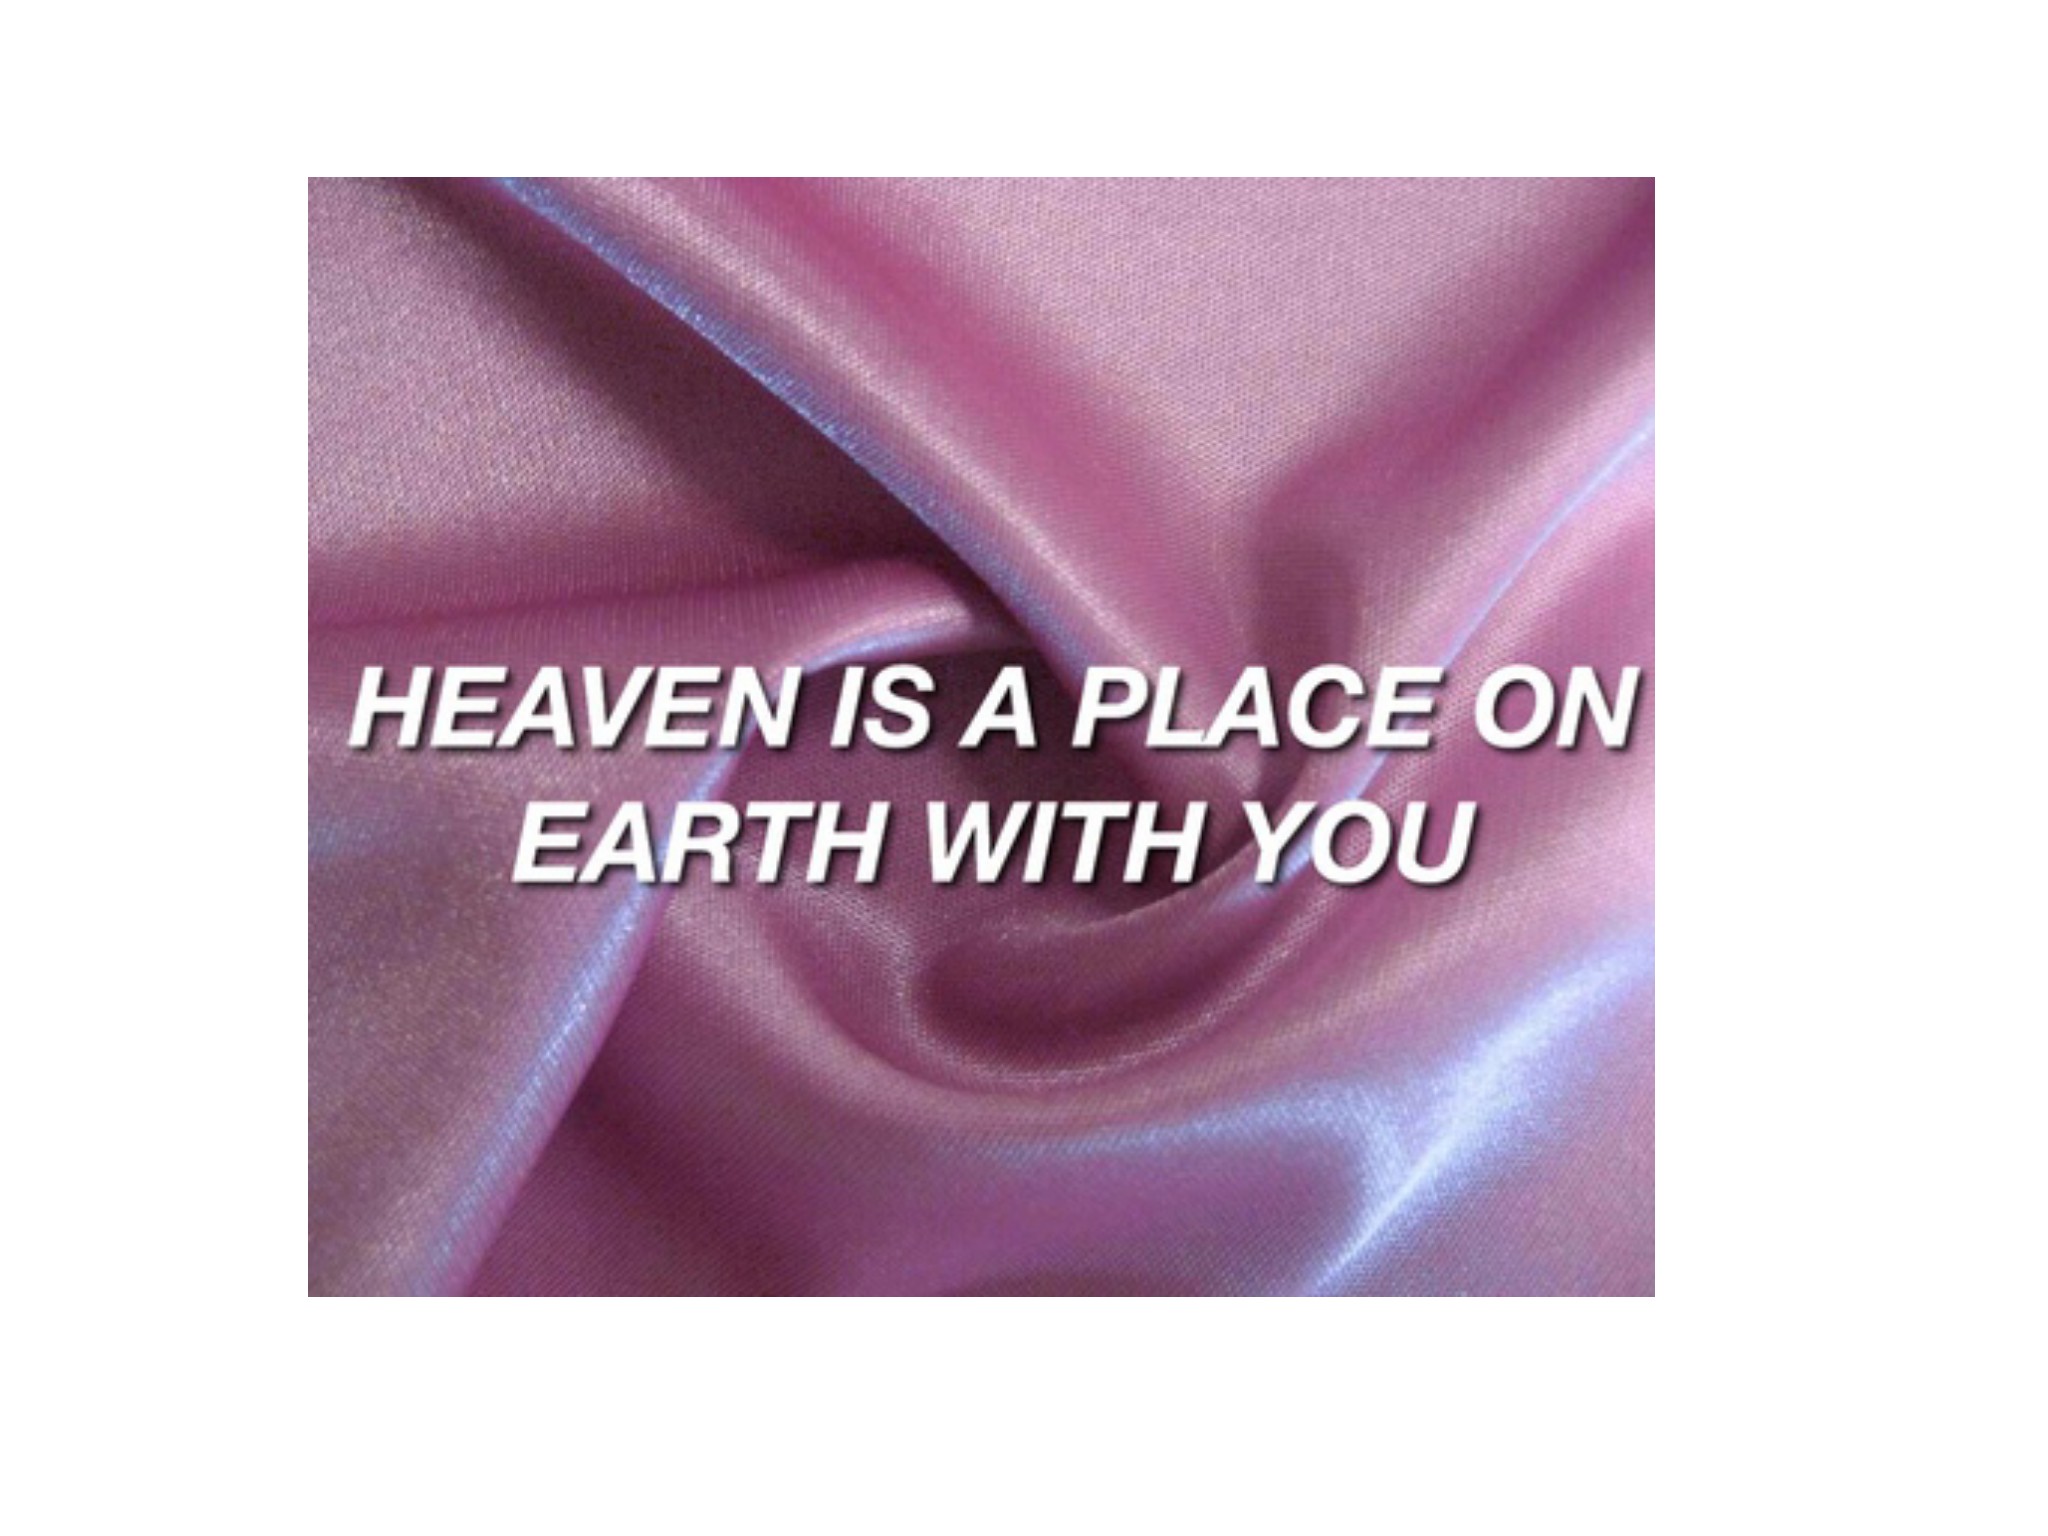 grunge aesthetic pastel love quotes tumblr 90 s âœ¨ðŸŒ¸ I